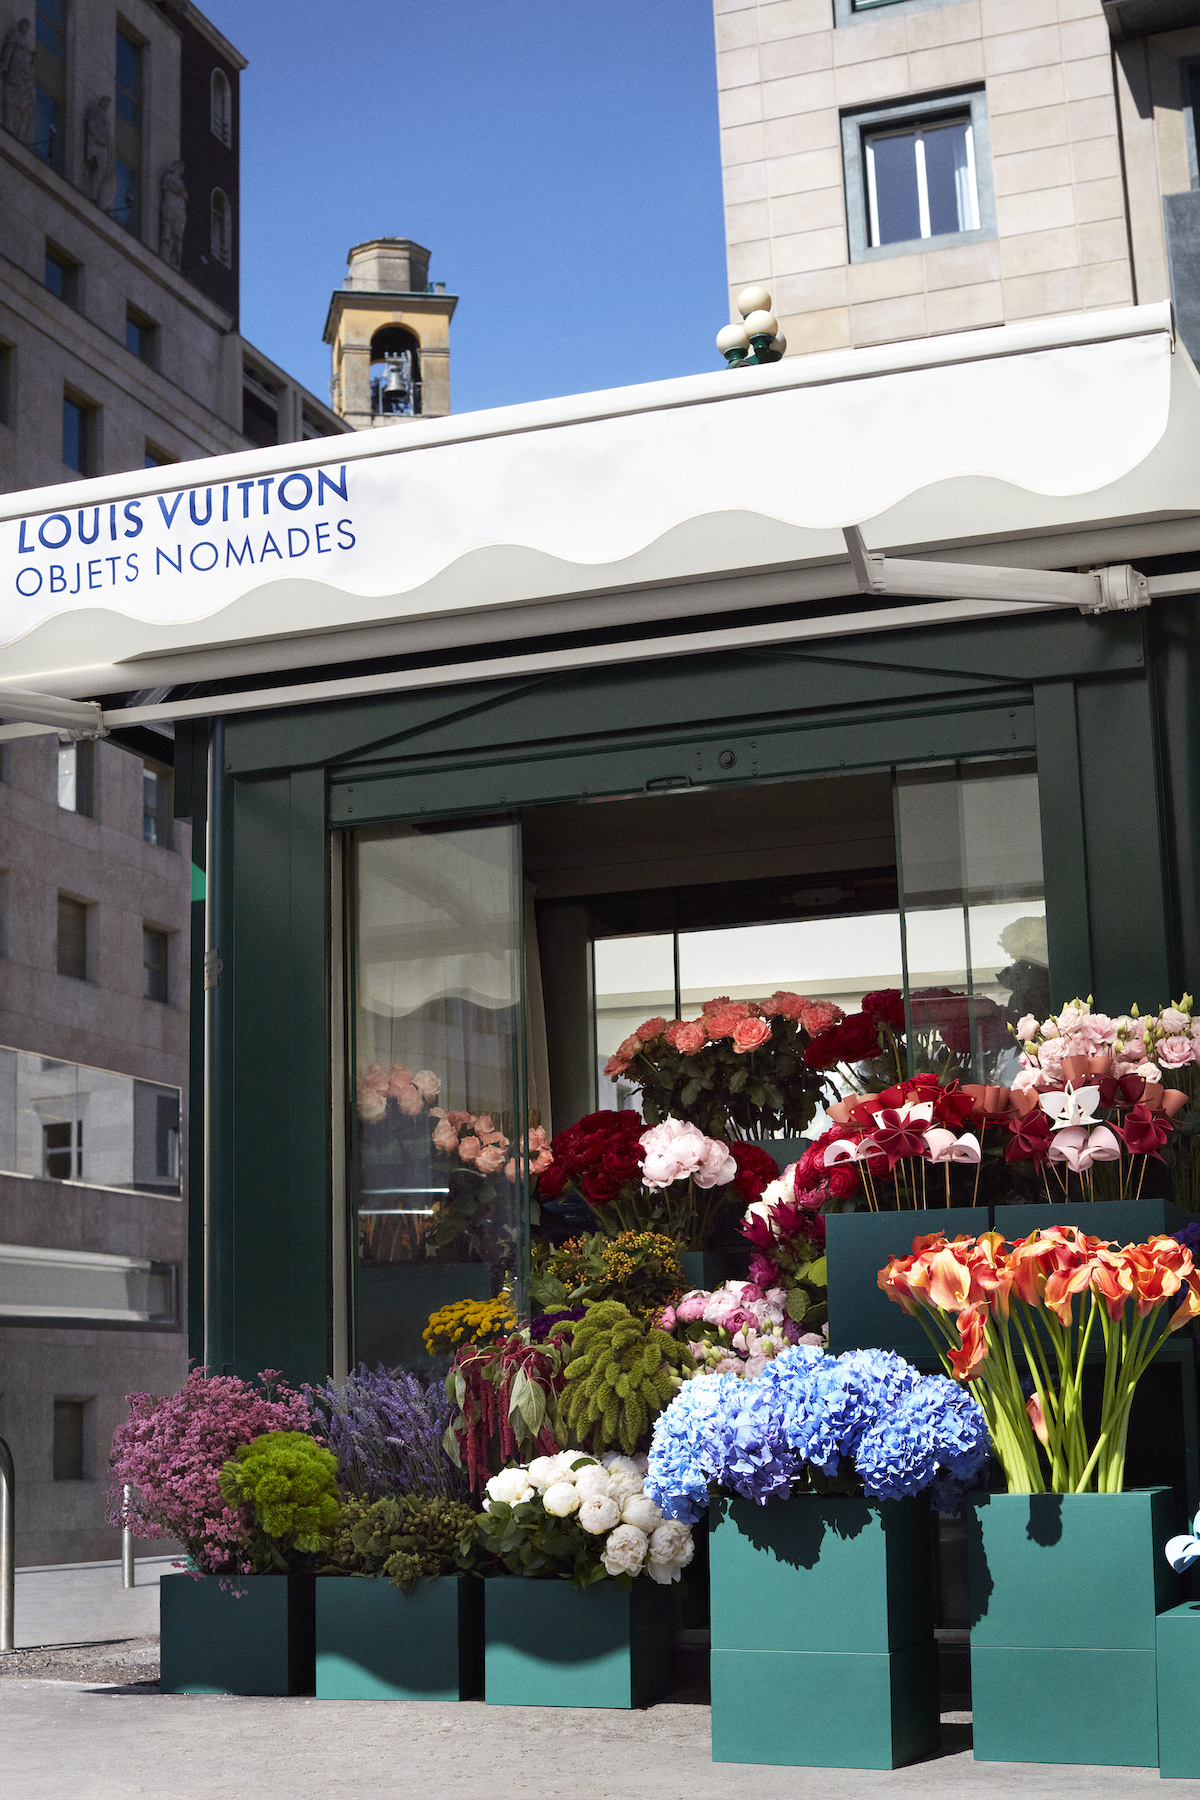 Louis Vuitton Objets Nomades in Milan